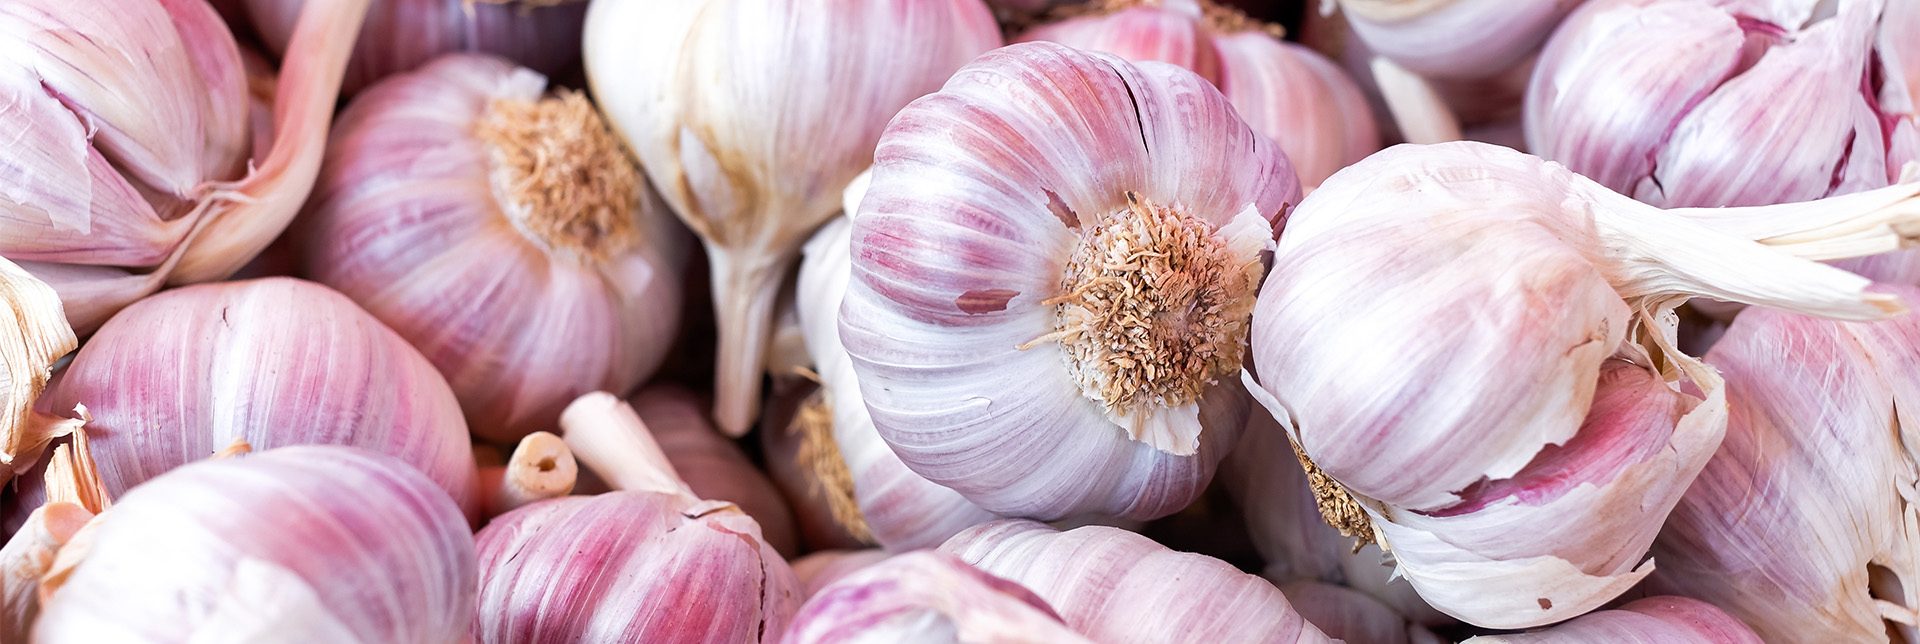 header-banner-garlic.jpg